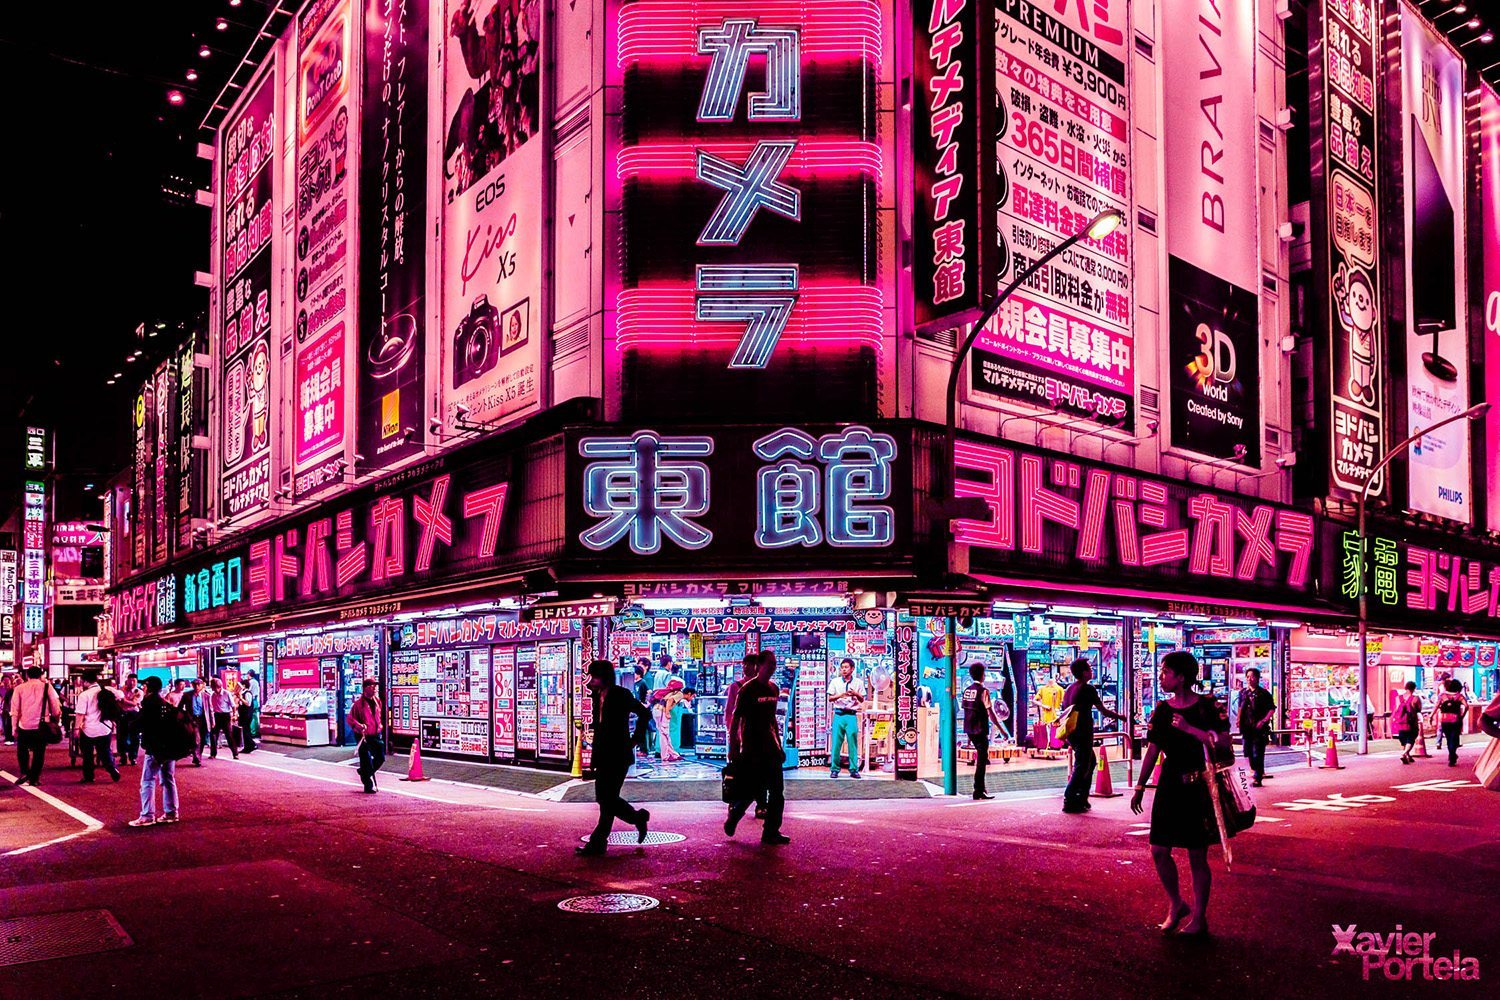 Tokyo's glow xavier portela rose_11